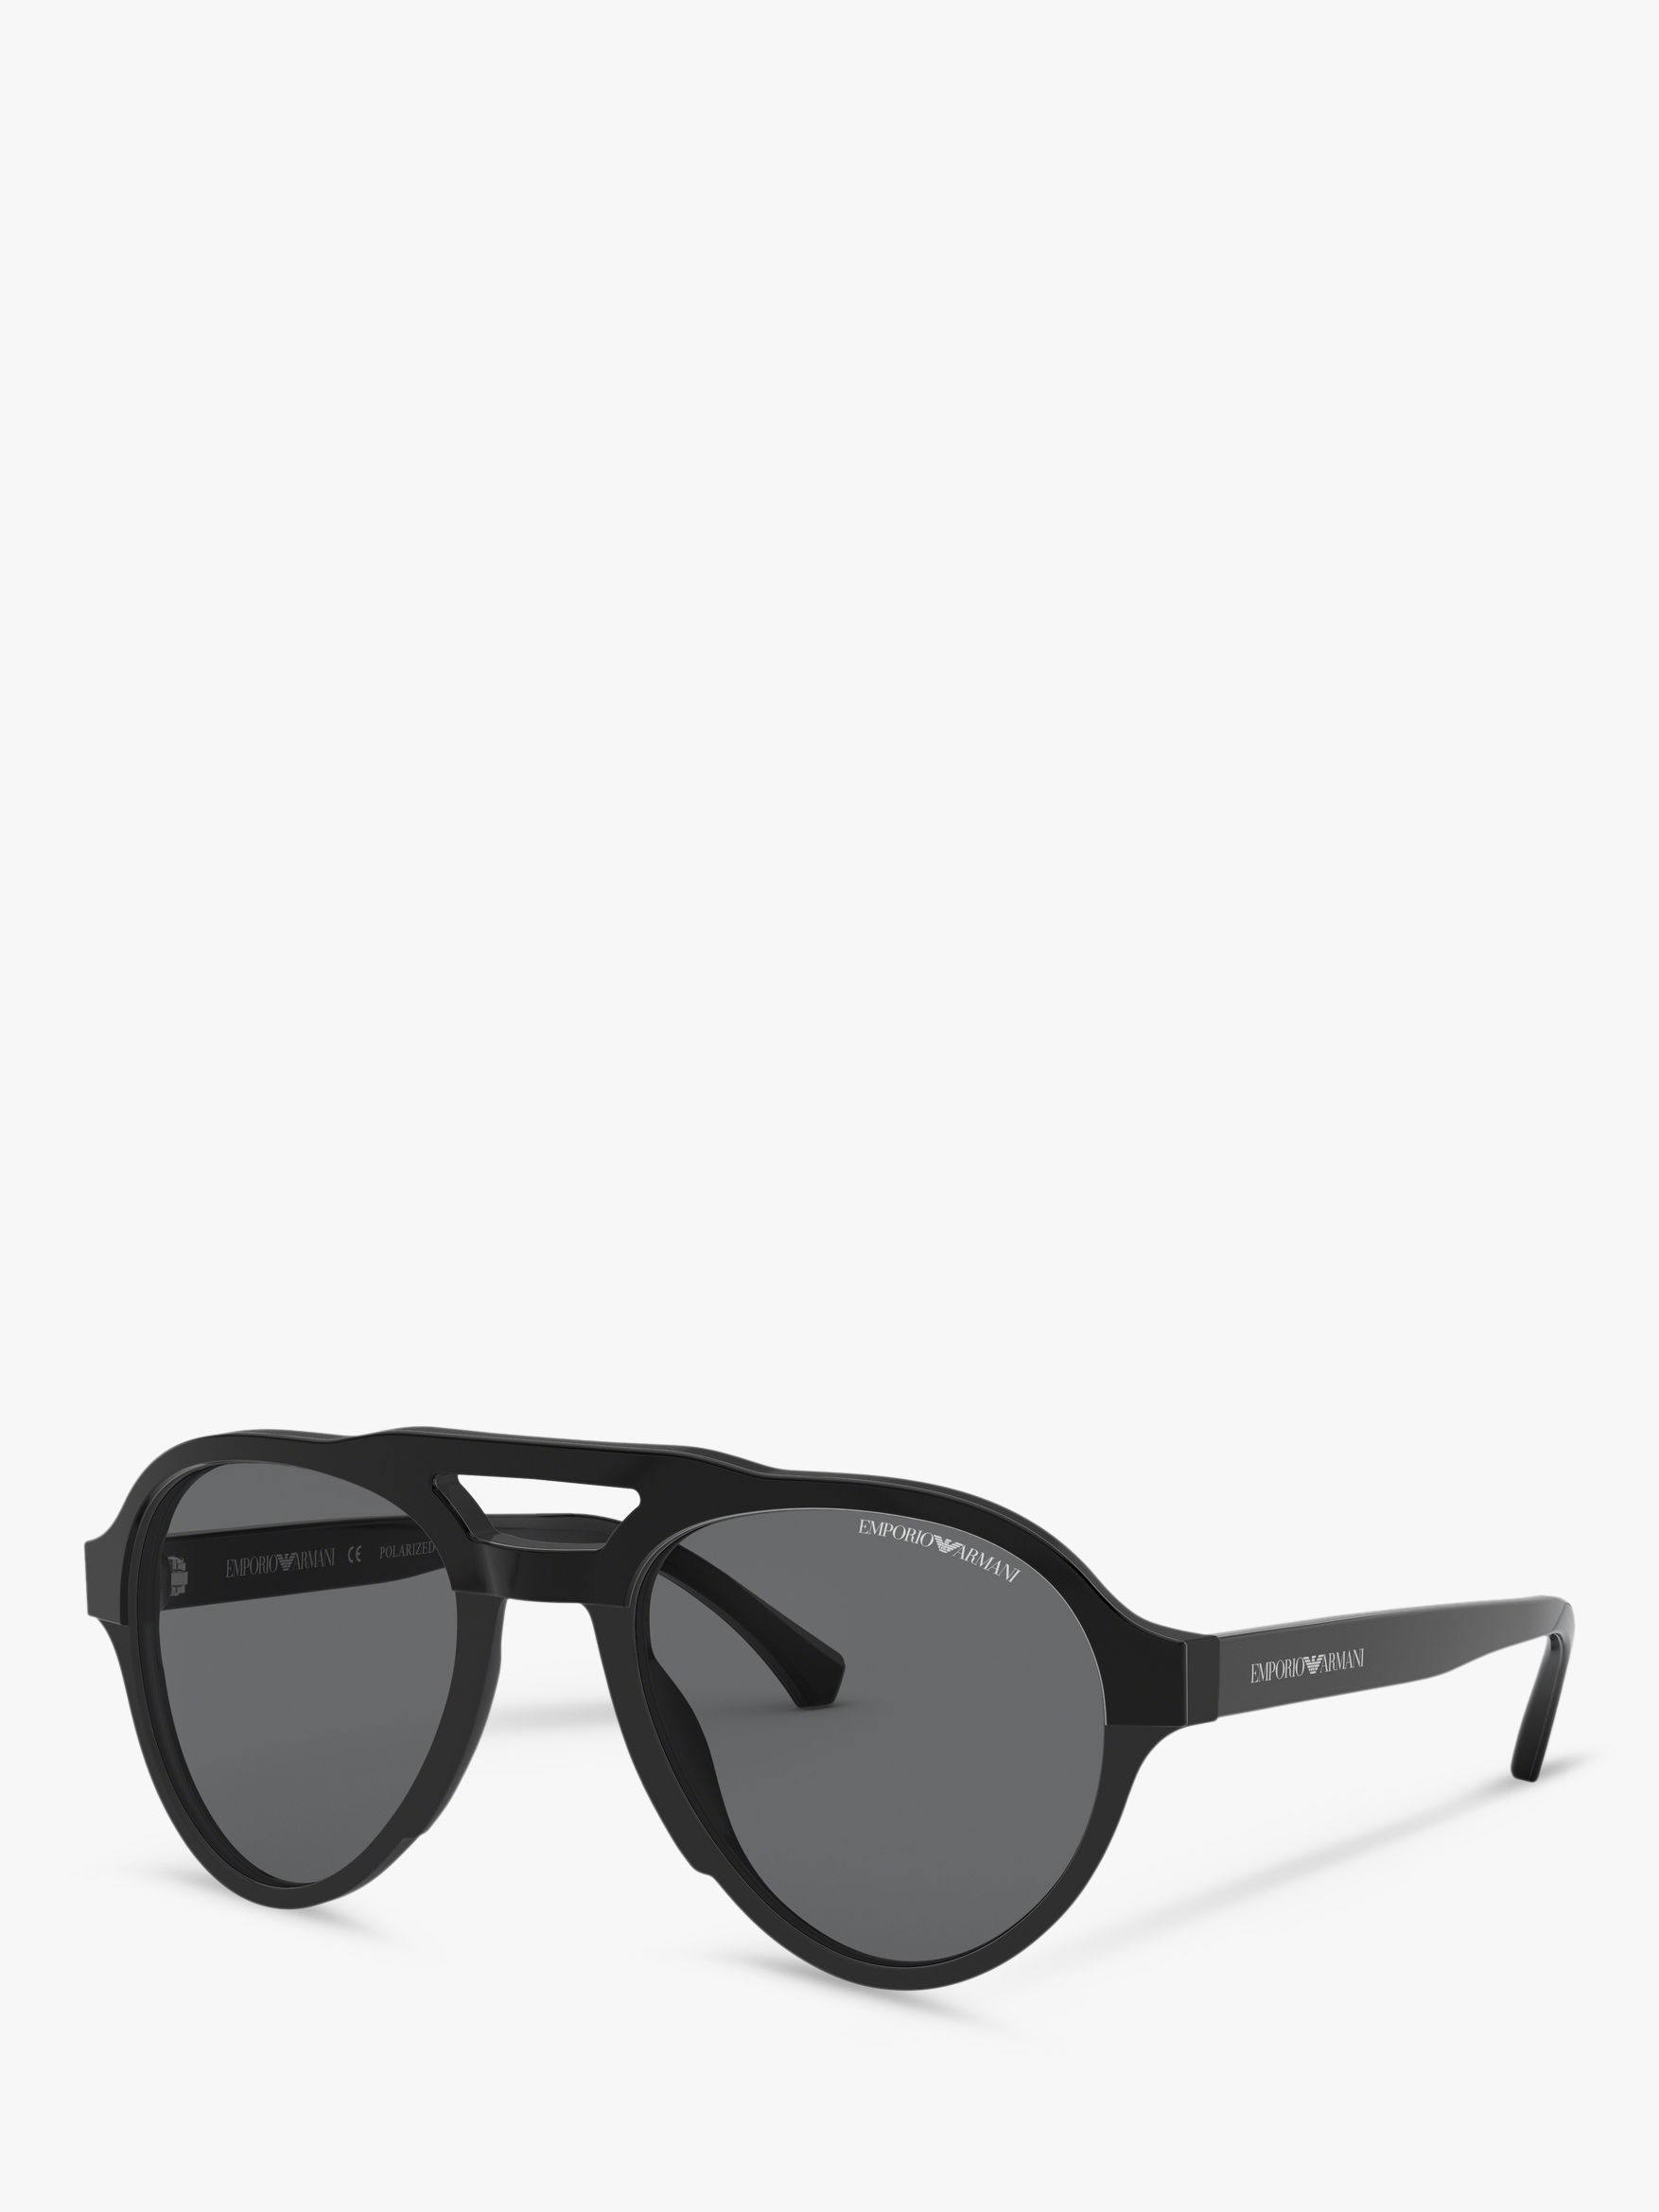 armani white sunglasses